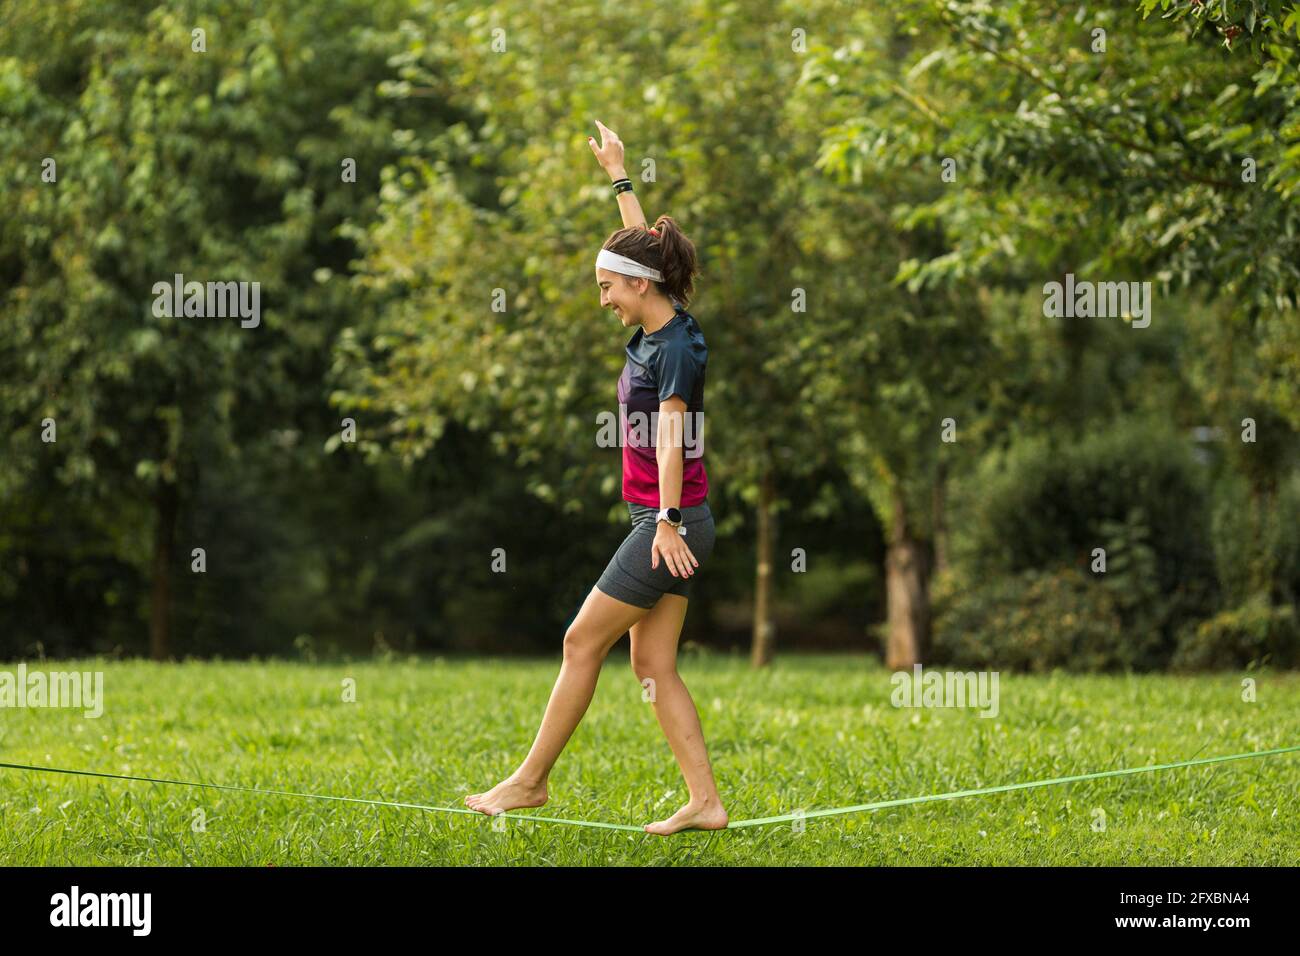 Female sportsperson slacklining at park Stock Photo